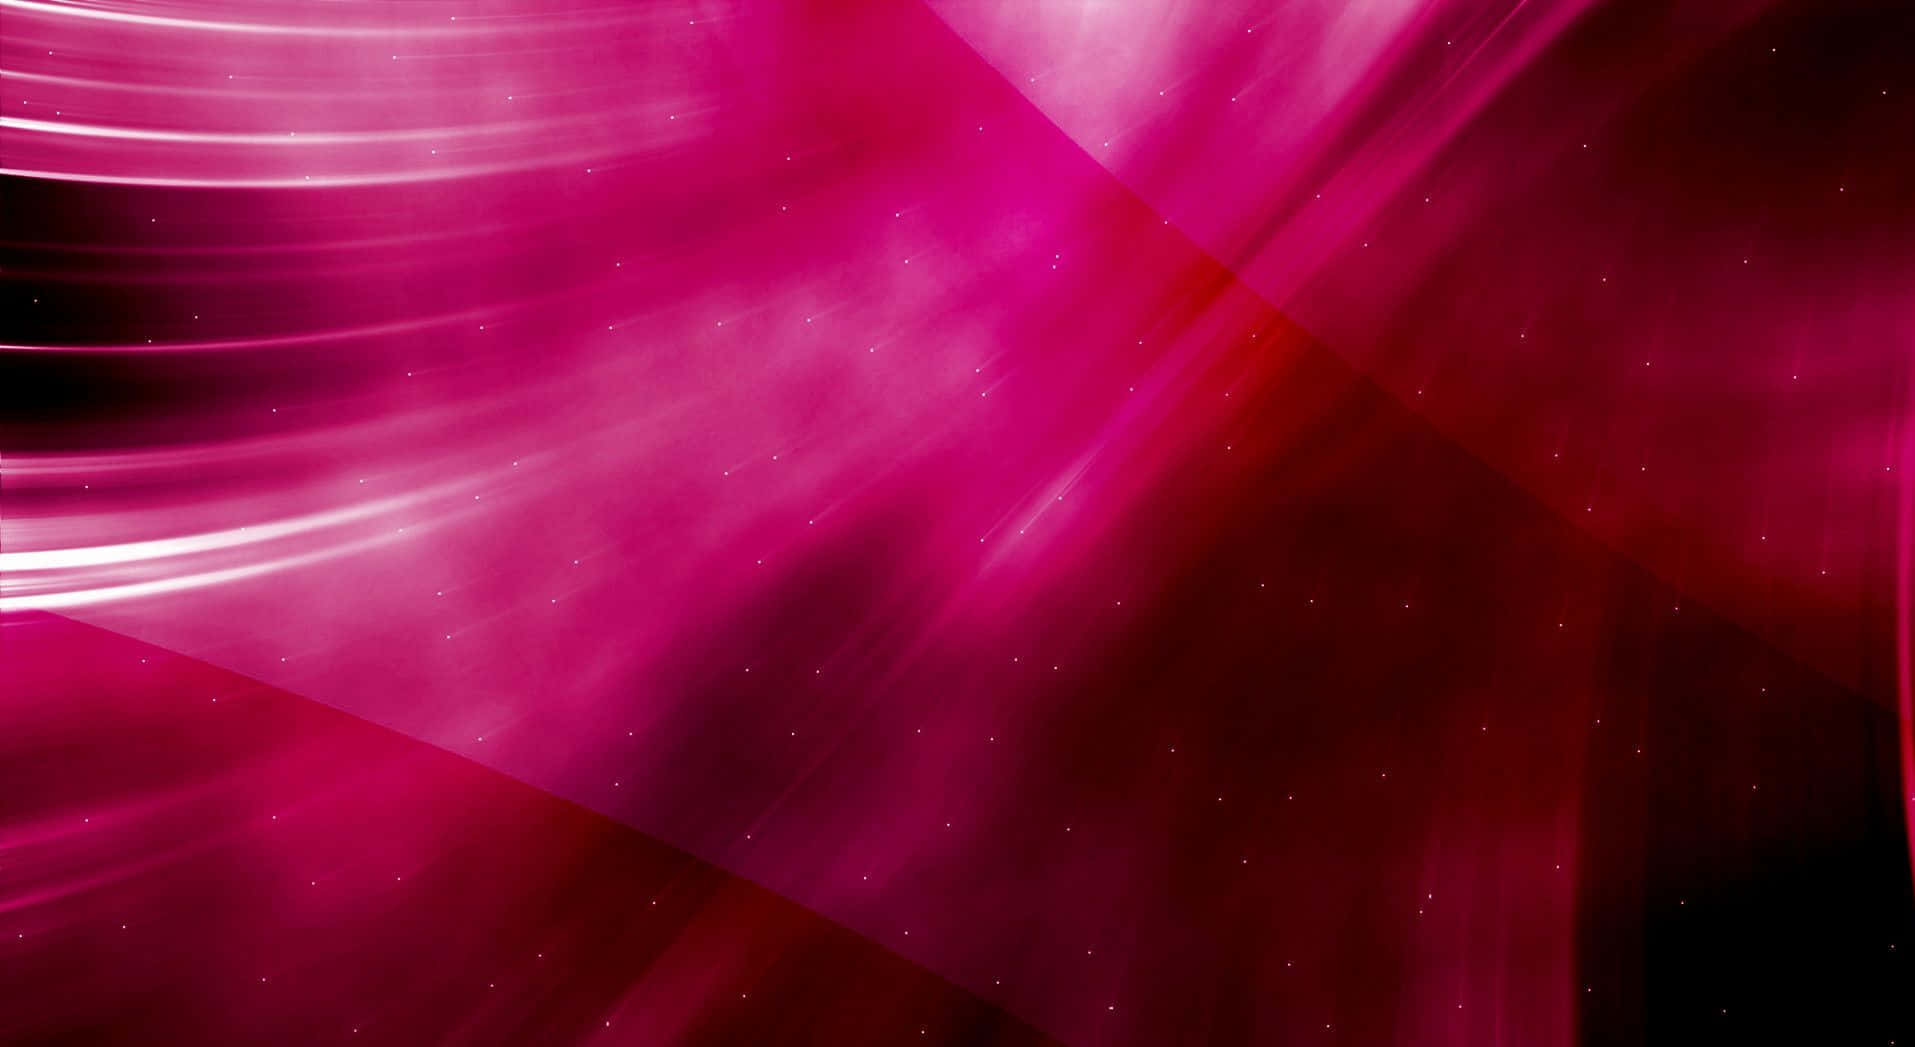 pink wallpaper abstract